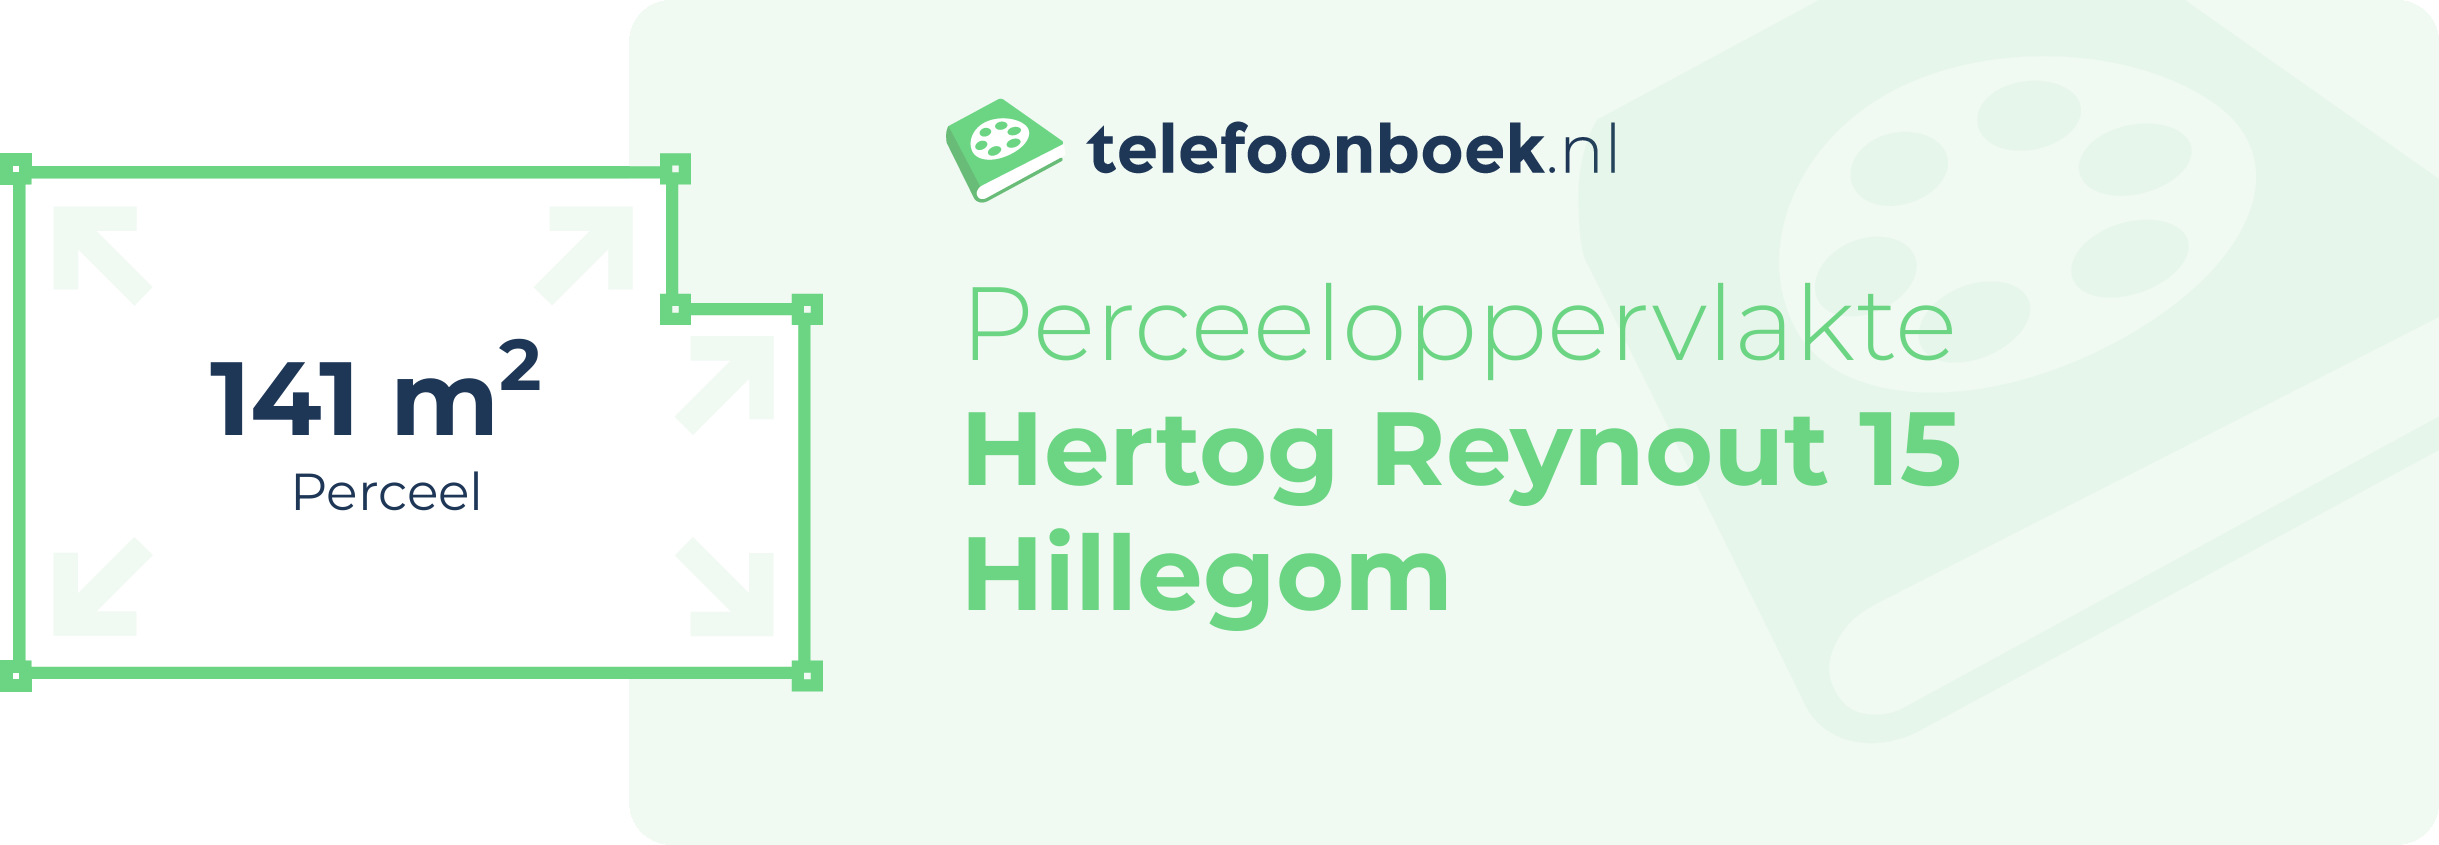 Perceeloppervlakte Hertog Reynout 15 Hillegom